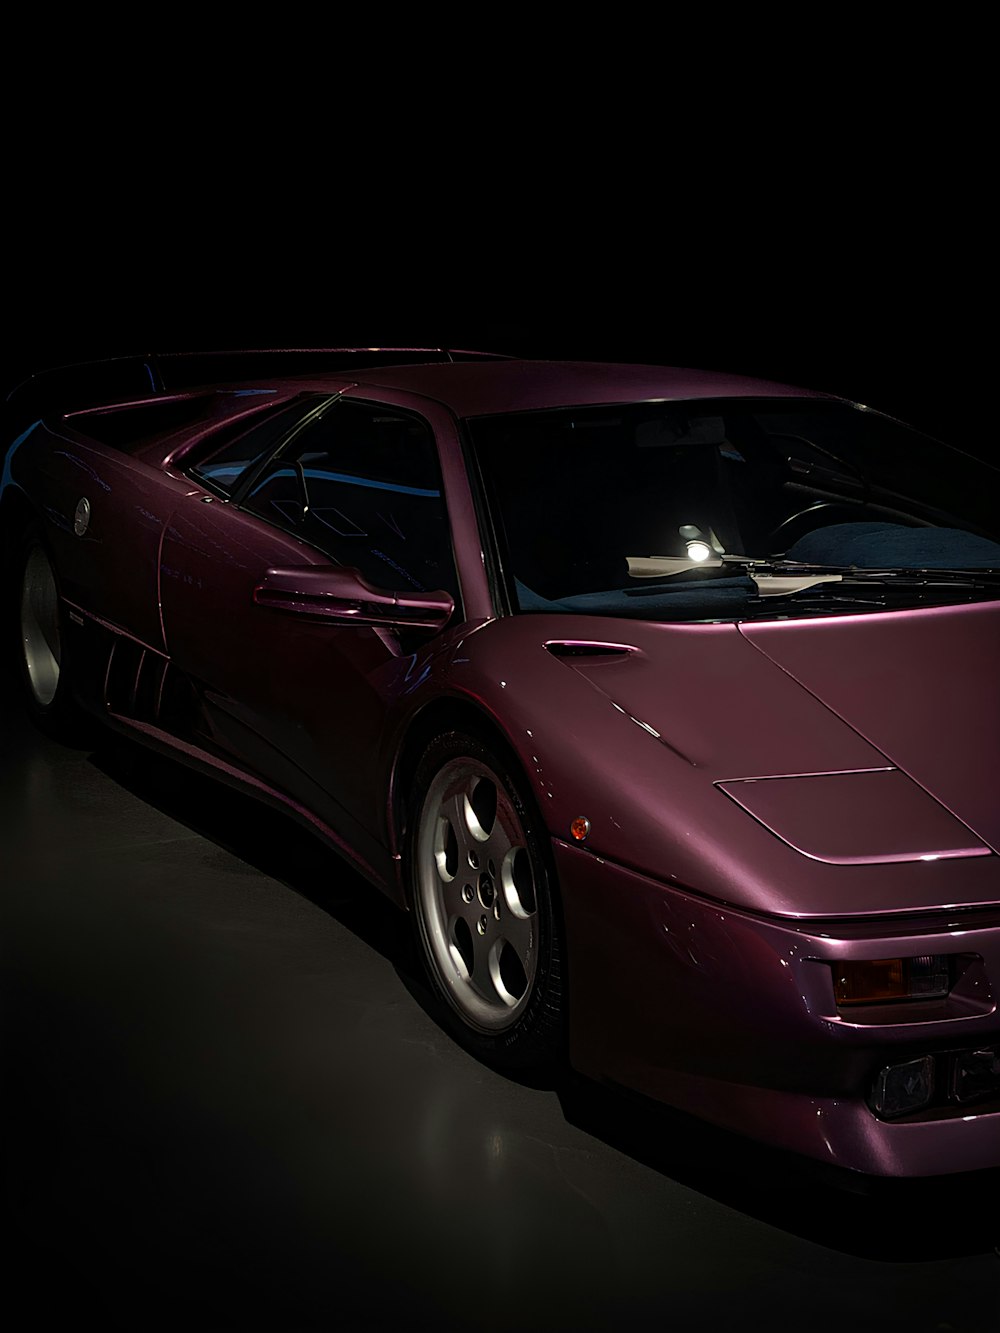 a purple sports car in a dark room